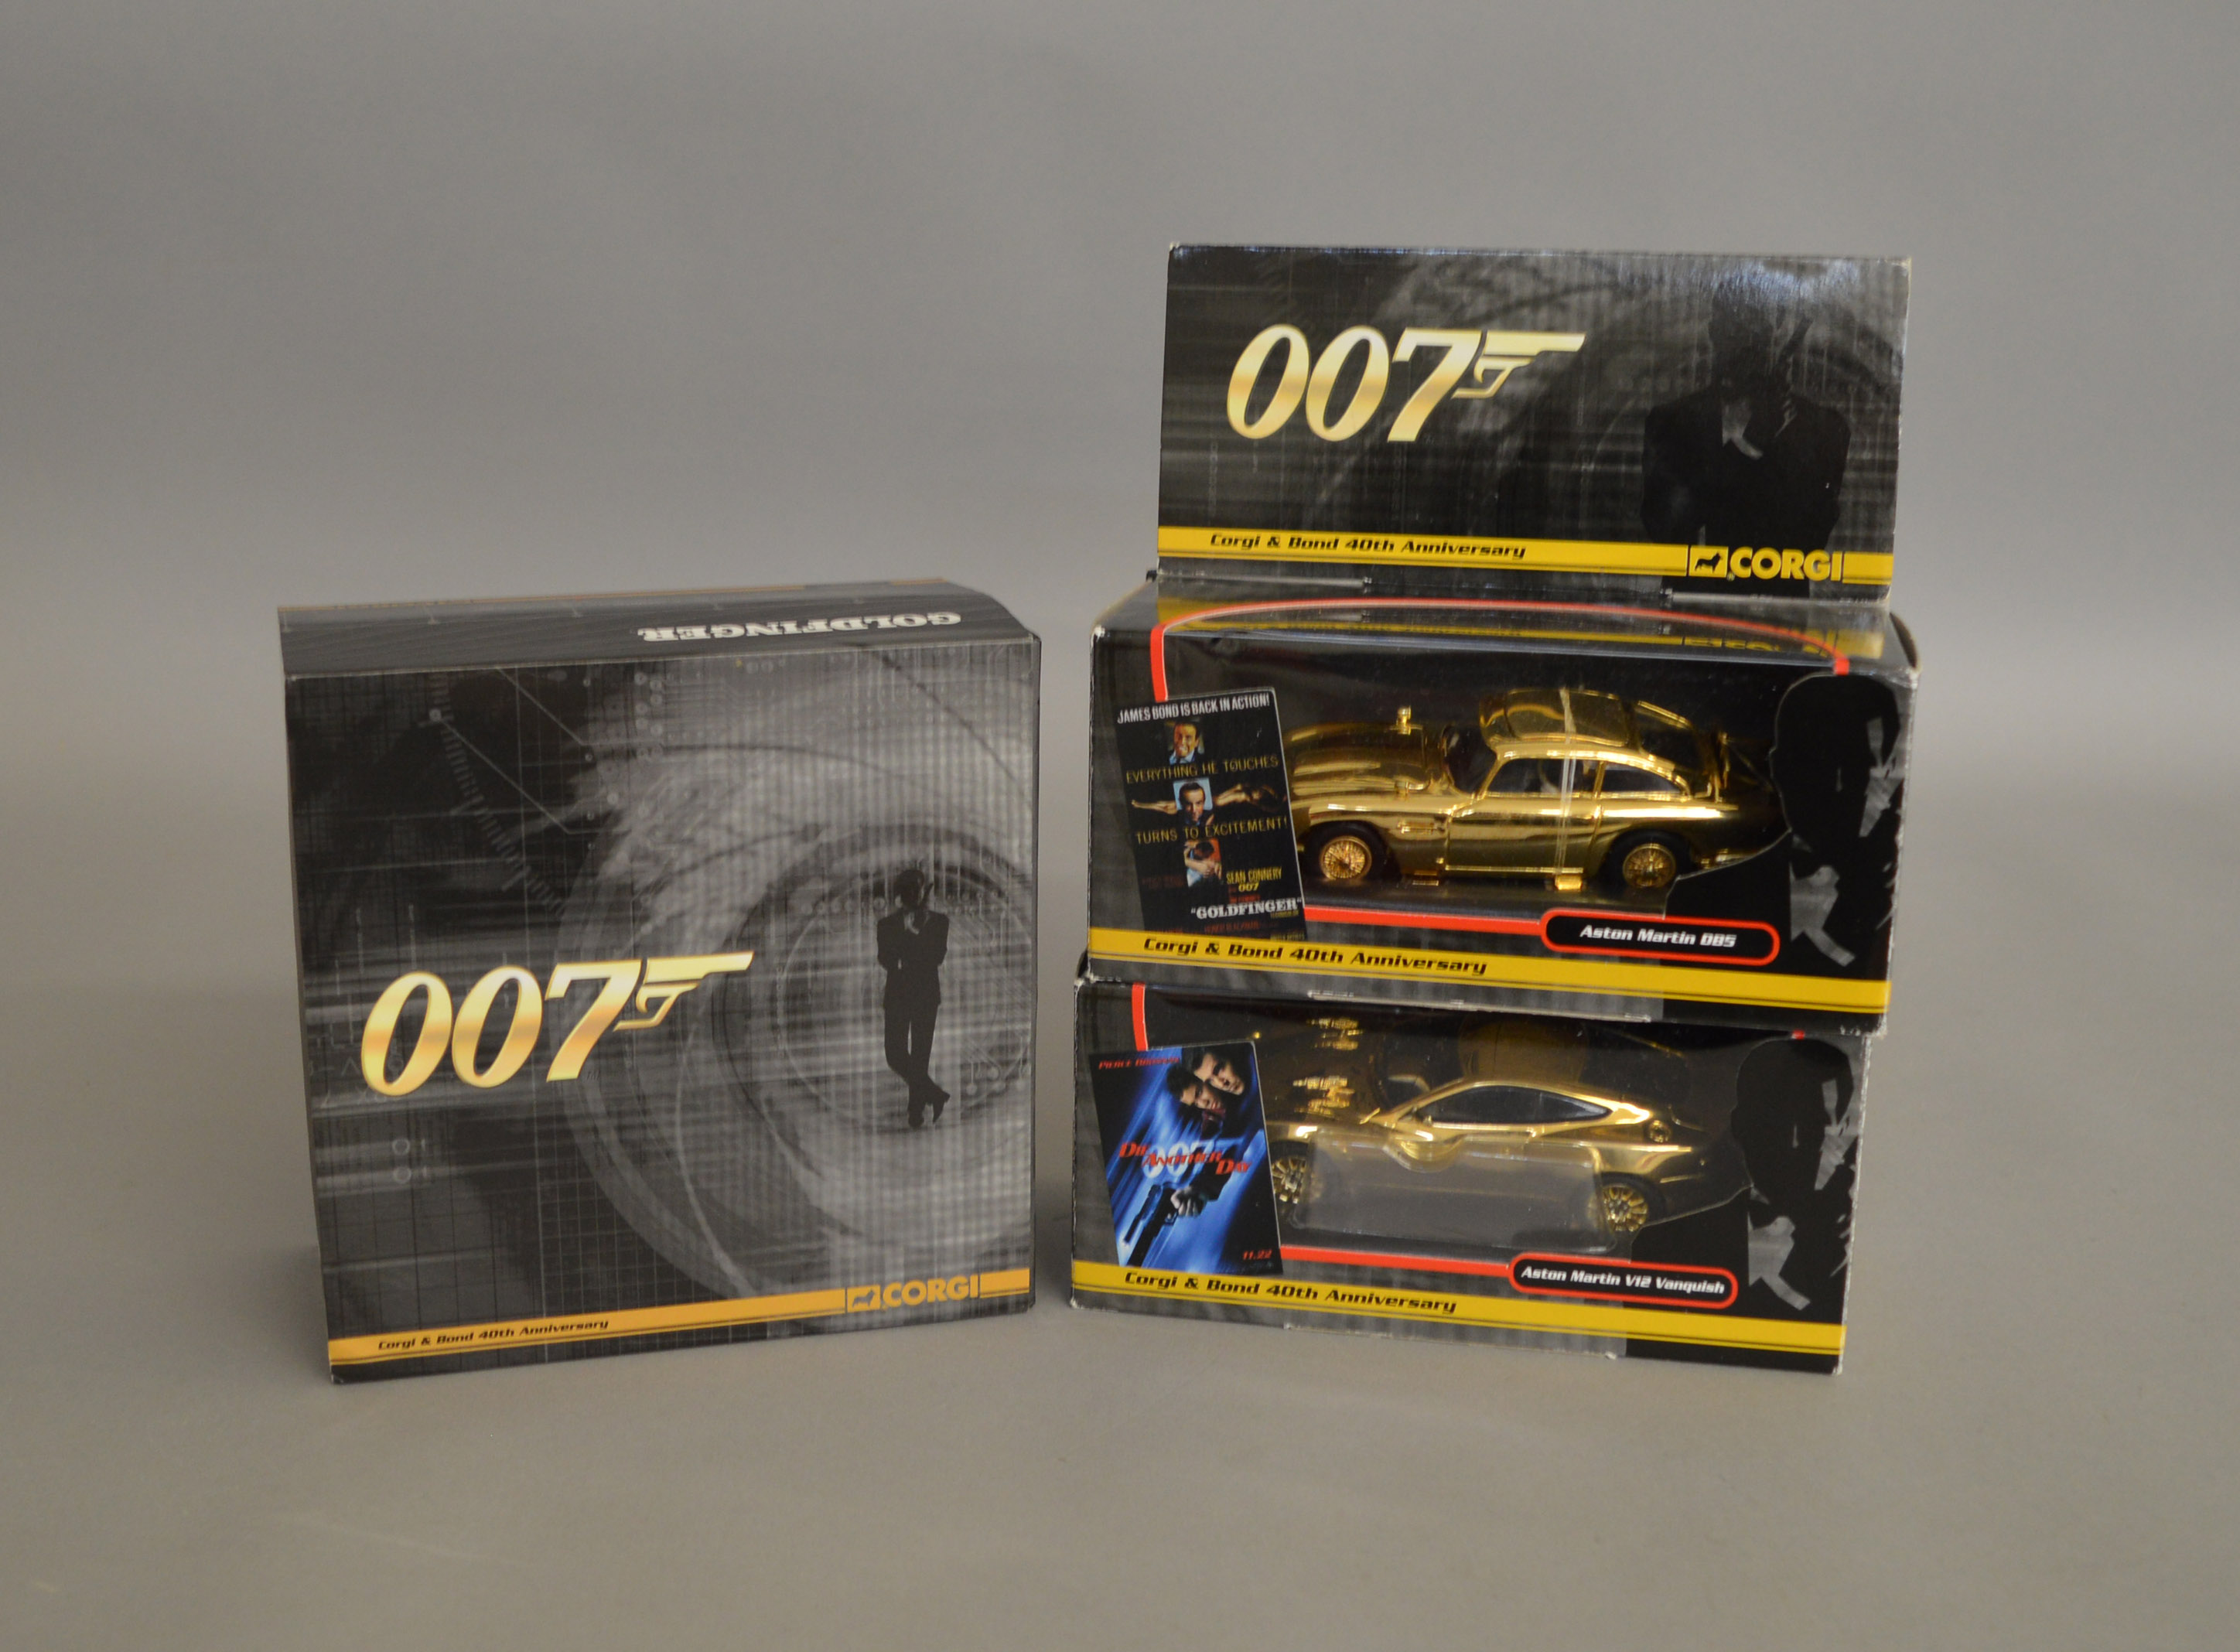 James Bond 007. 3 boxed Corgi 'Corgi & Bond 40th Anniversary' diecast model issues all with gold